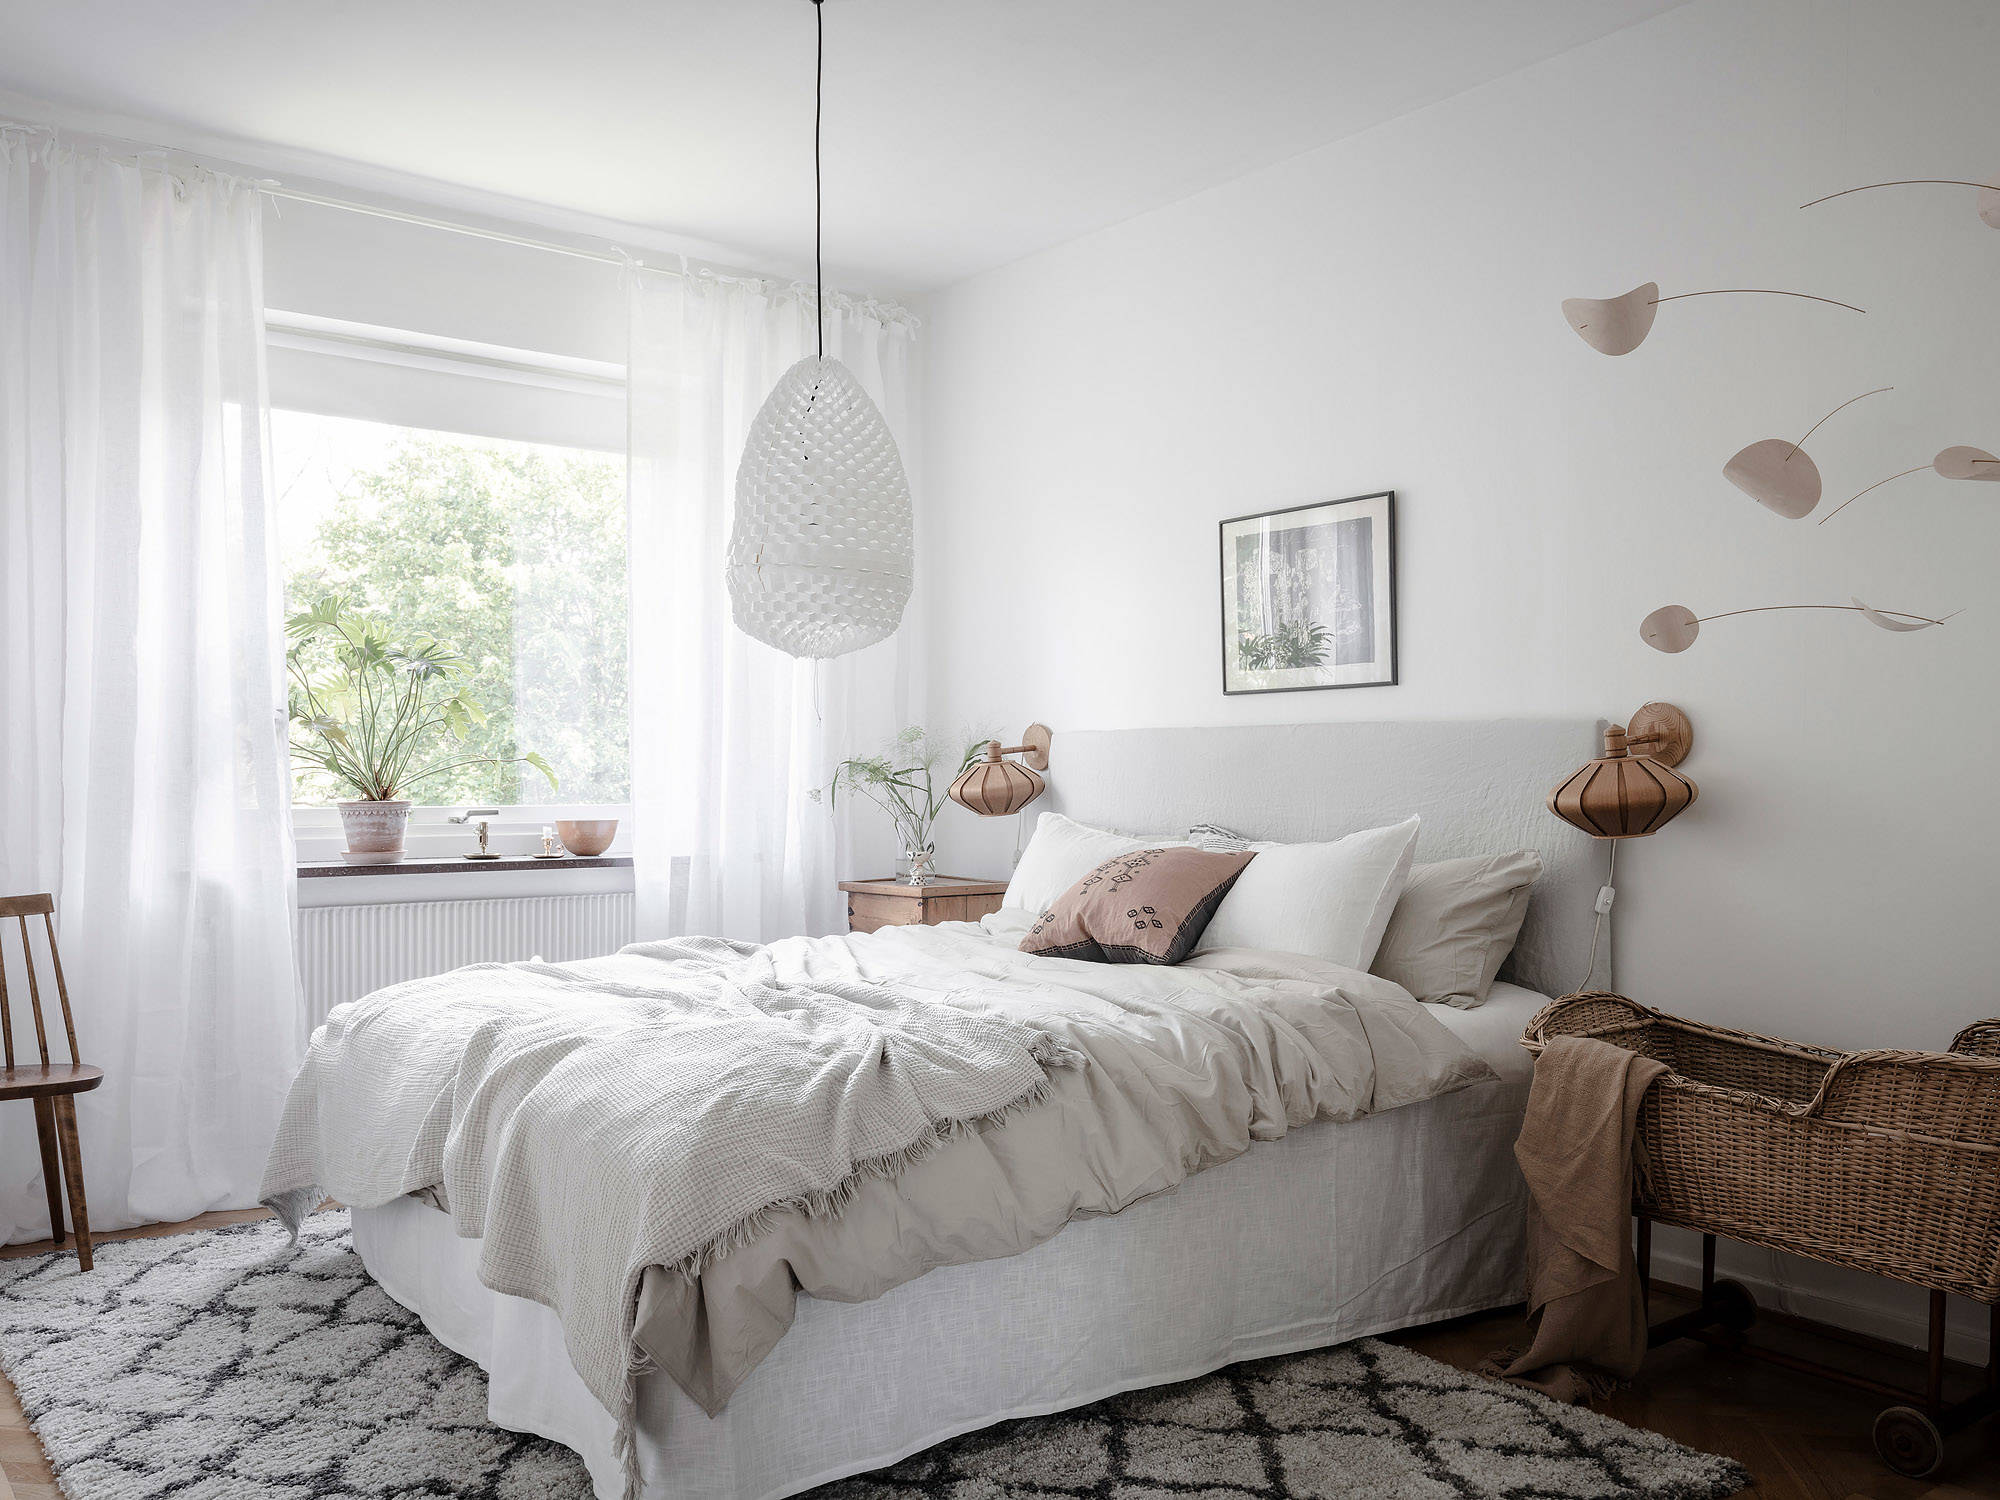 White bedroom with wood accents - COCO LAPINE DESIGNCOCO LAPINE DESIGN